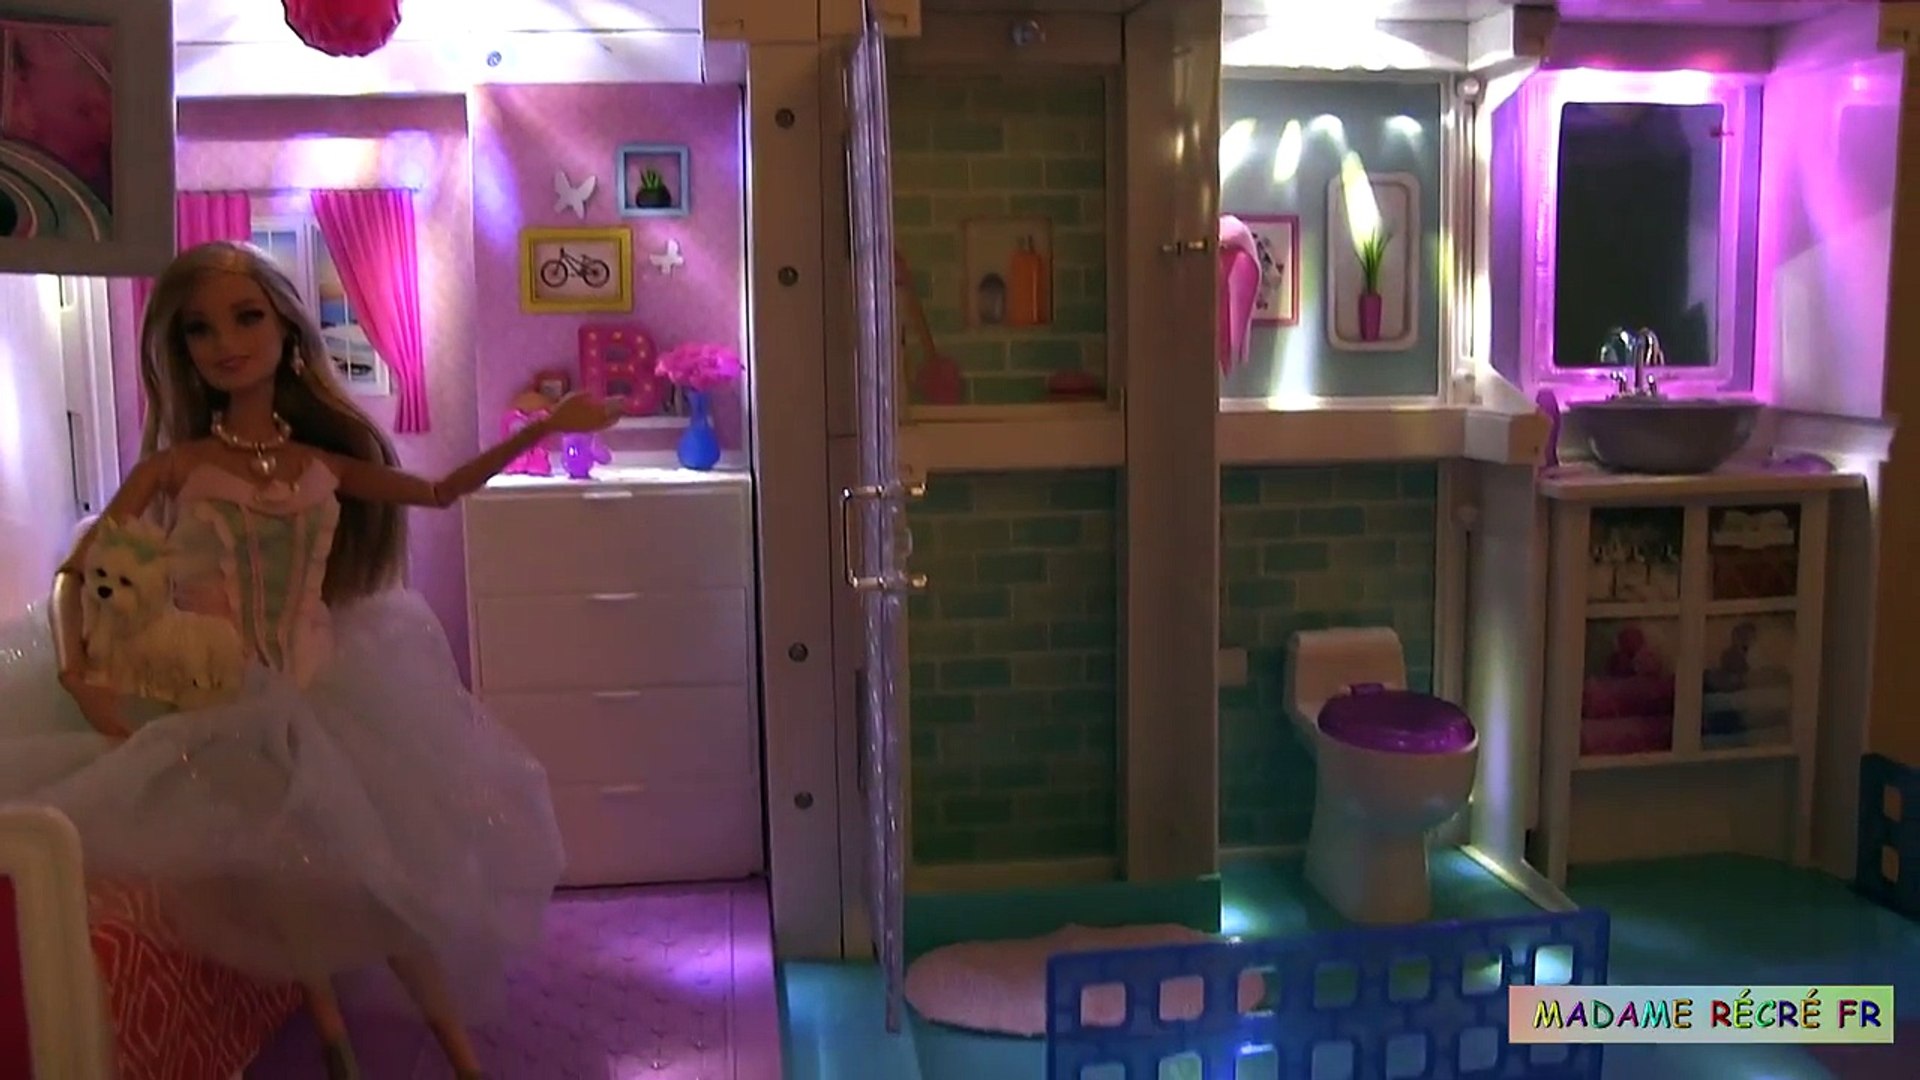 barbie dream house jouet